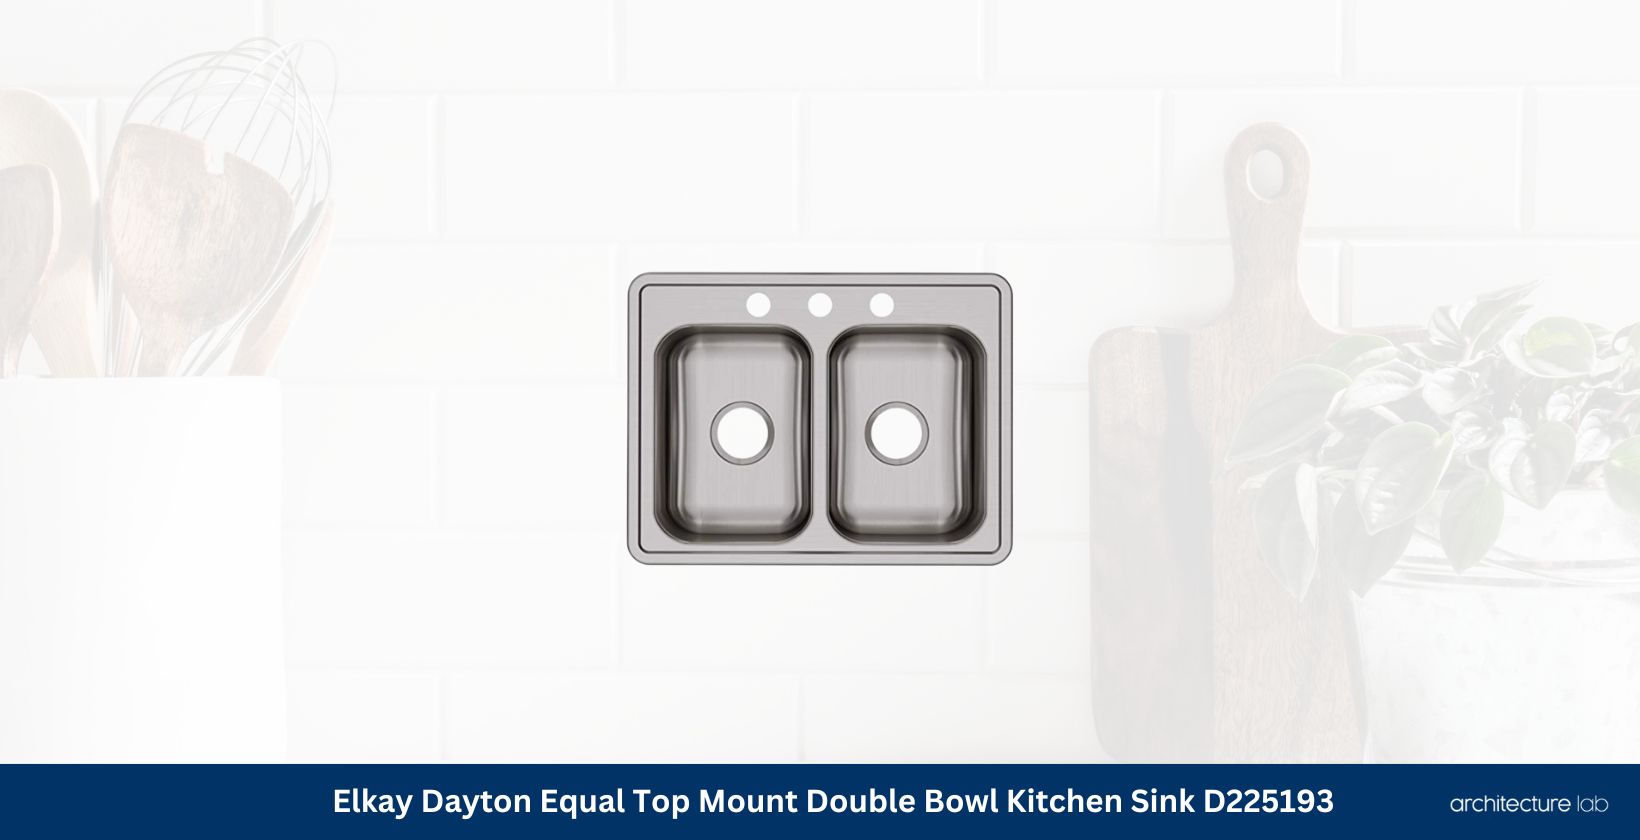 Elkay dayton top mount double bowl kitchen sink d225193